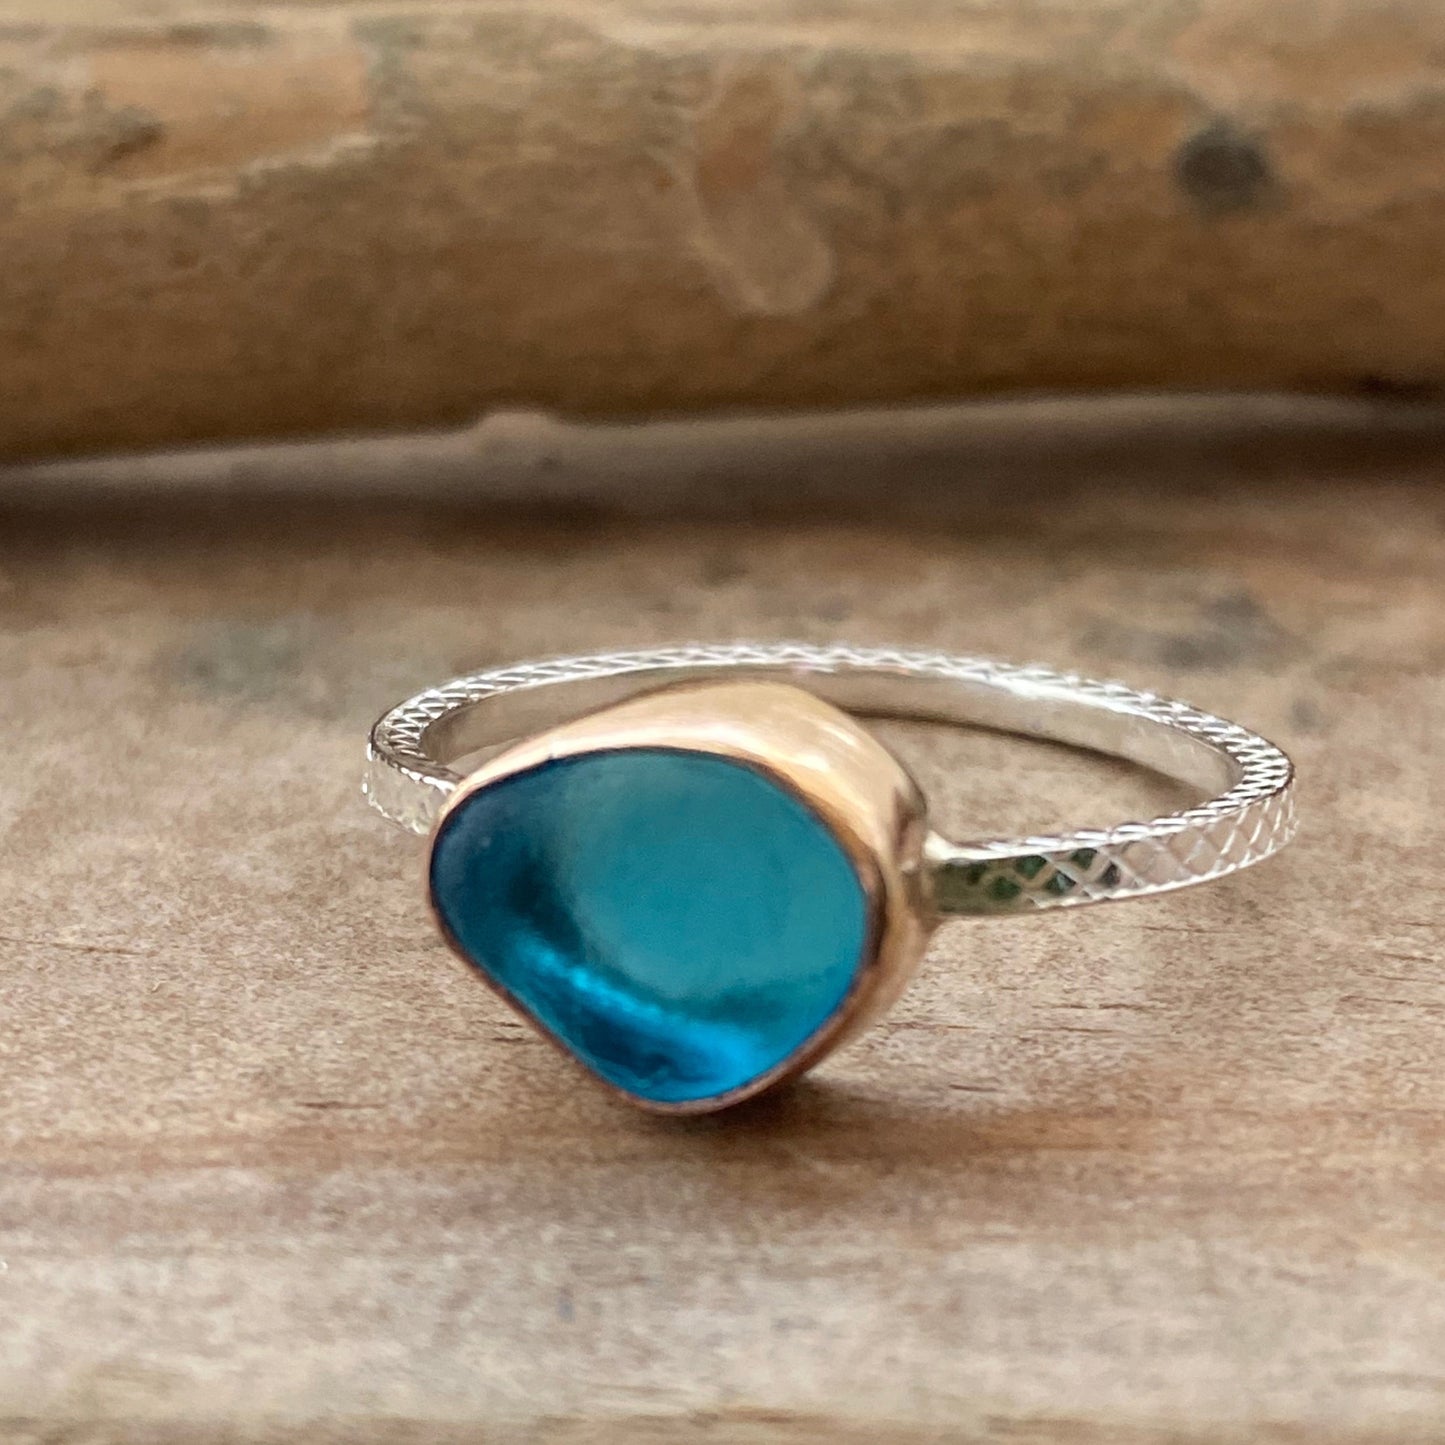 Aqua Sea Glass Ring with gold Bezel